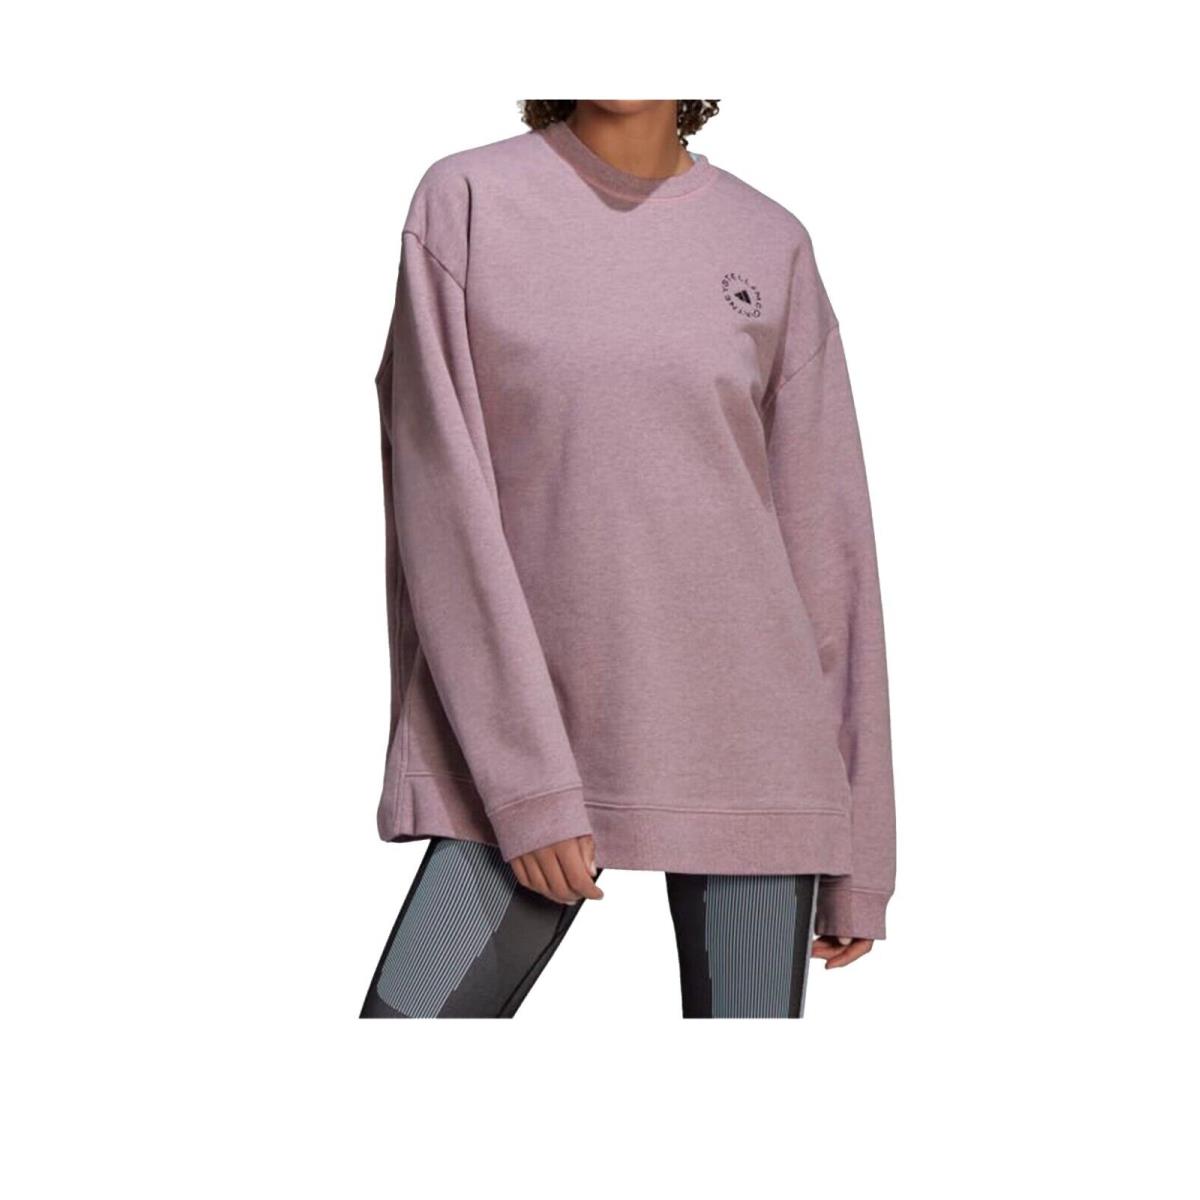 Adidas By Stella Mccartney Sportswear Sweatshirt Easy Pink Size S - Pink